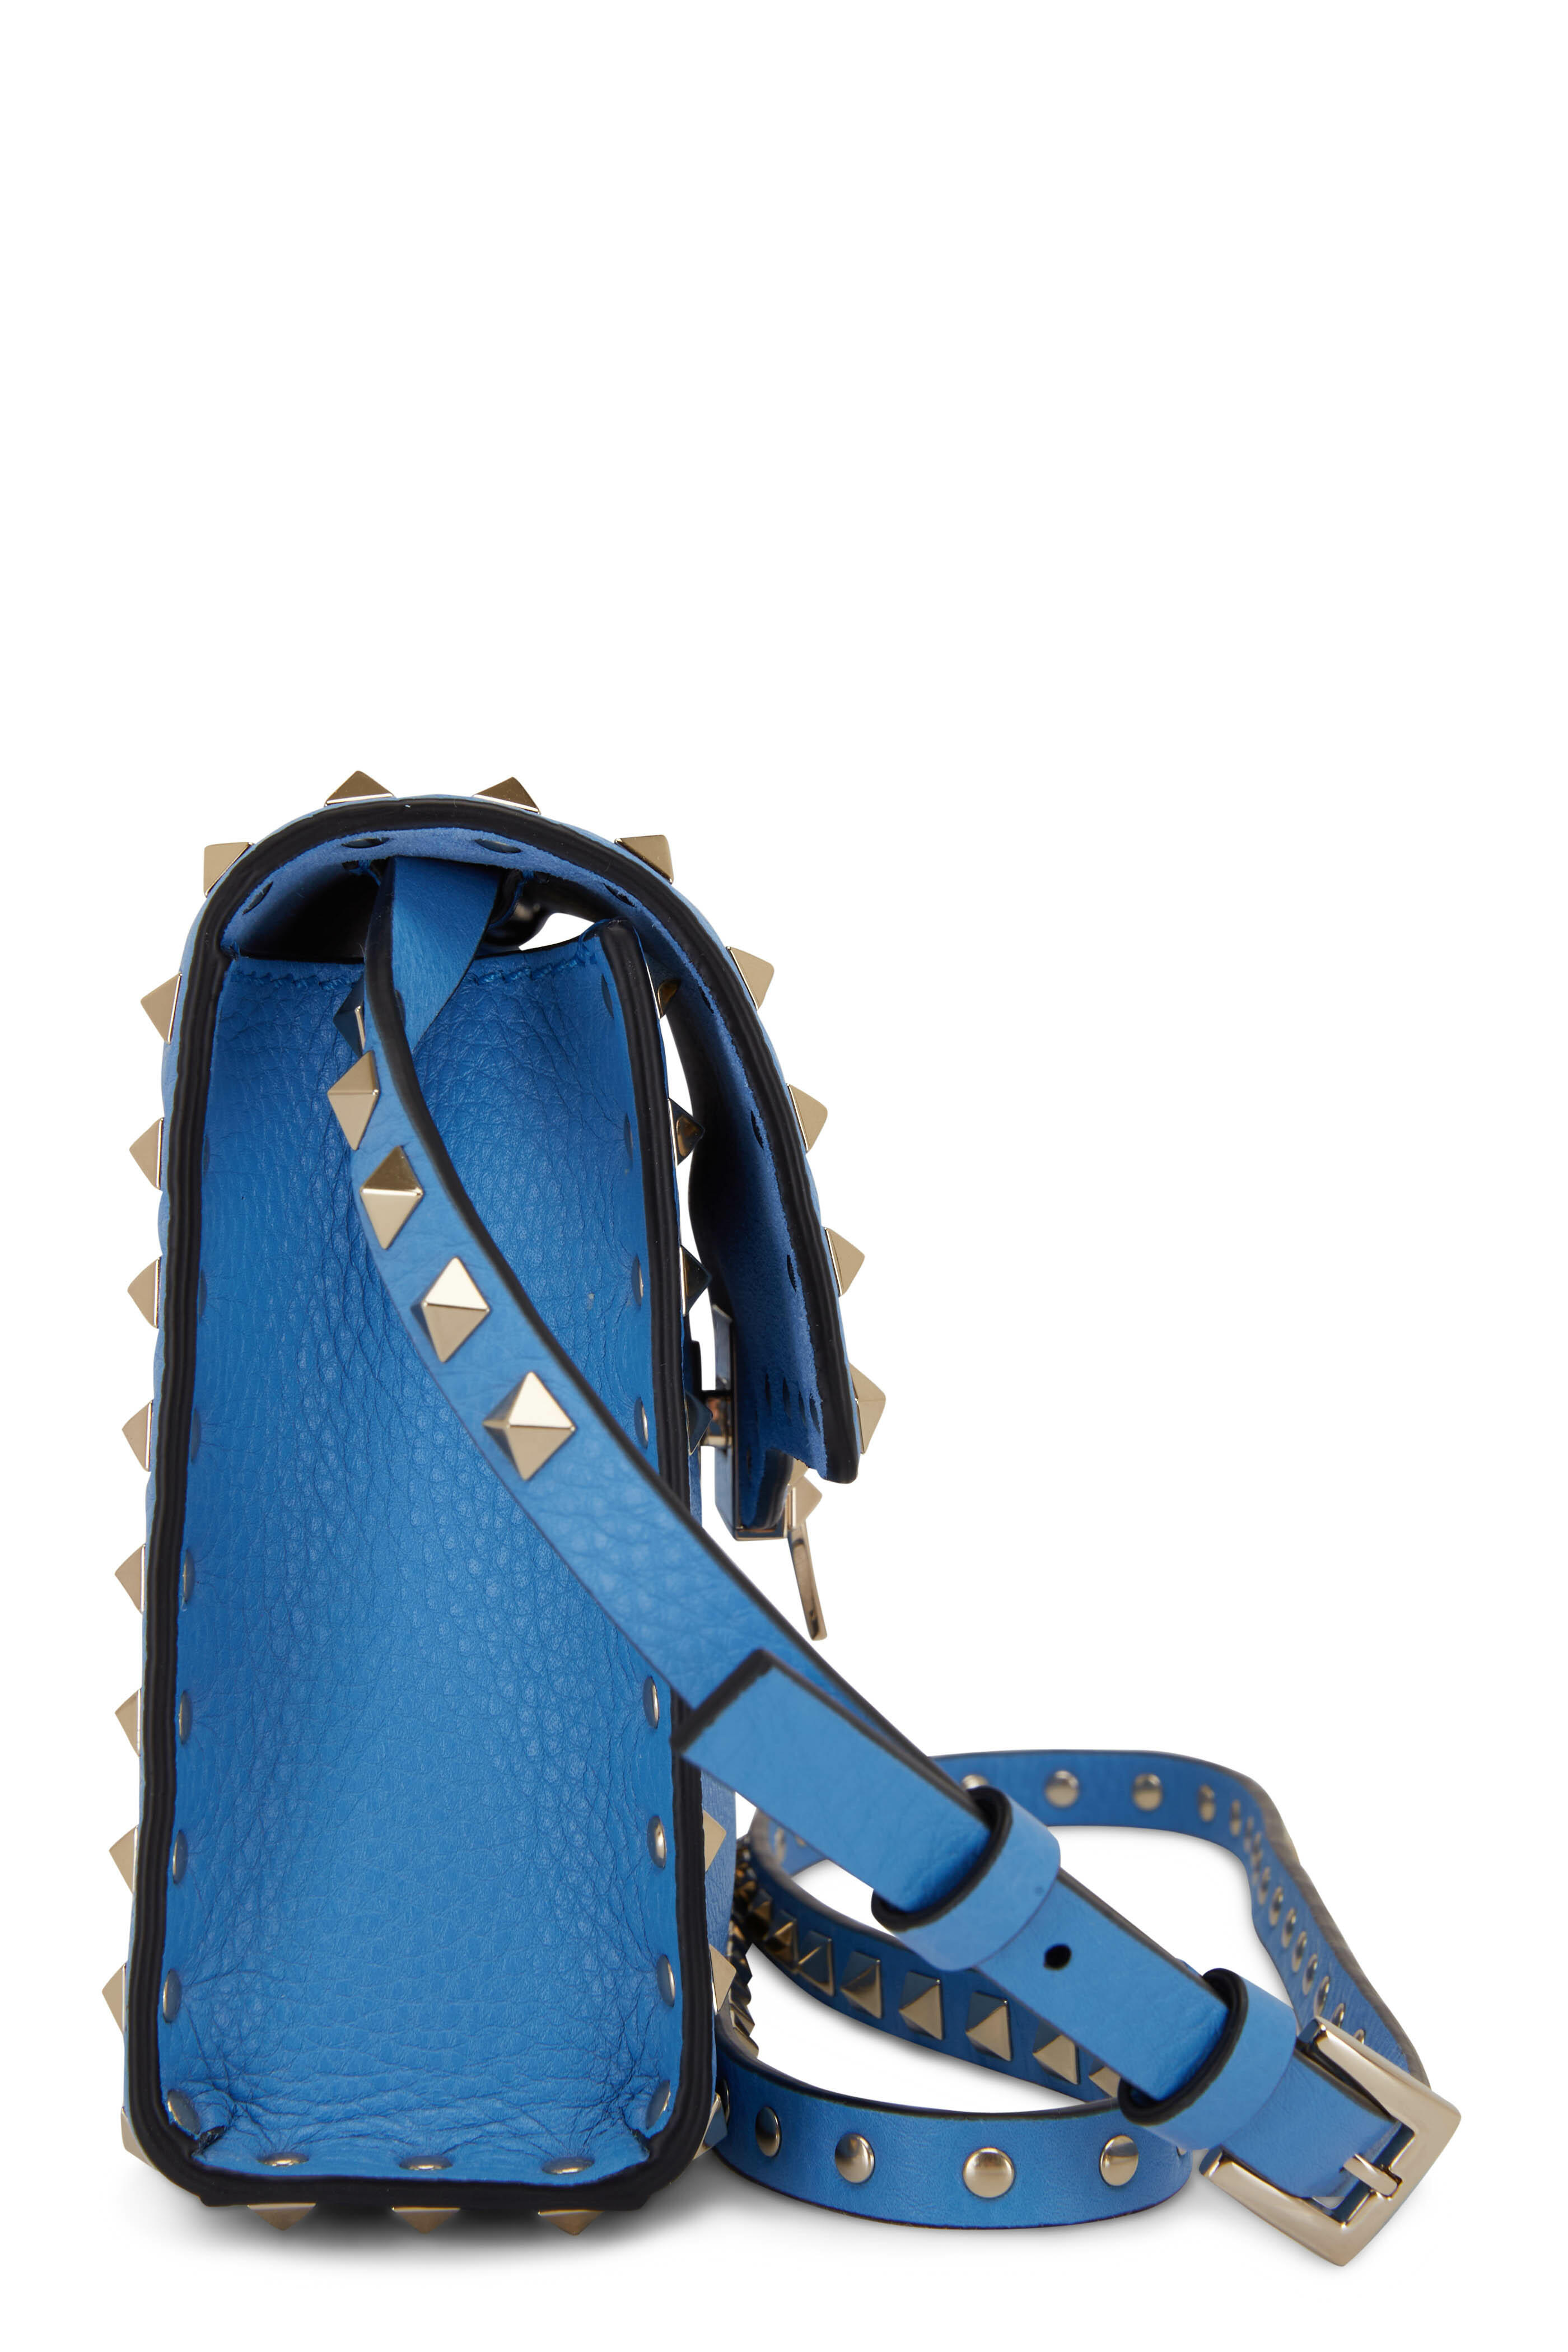 Valentino Small Rockstud Metallic Blue Leather Shoulder Bag - MyDesignerly